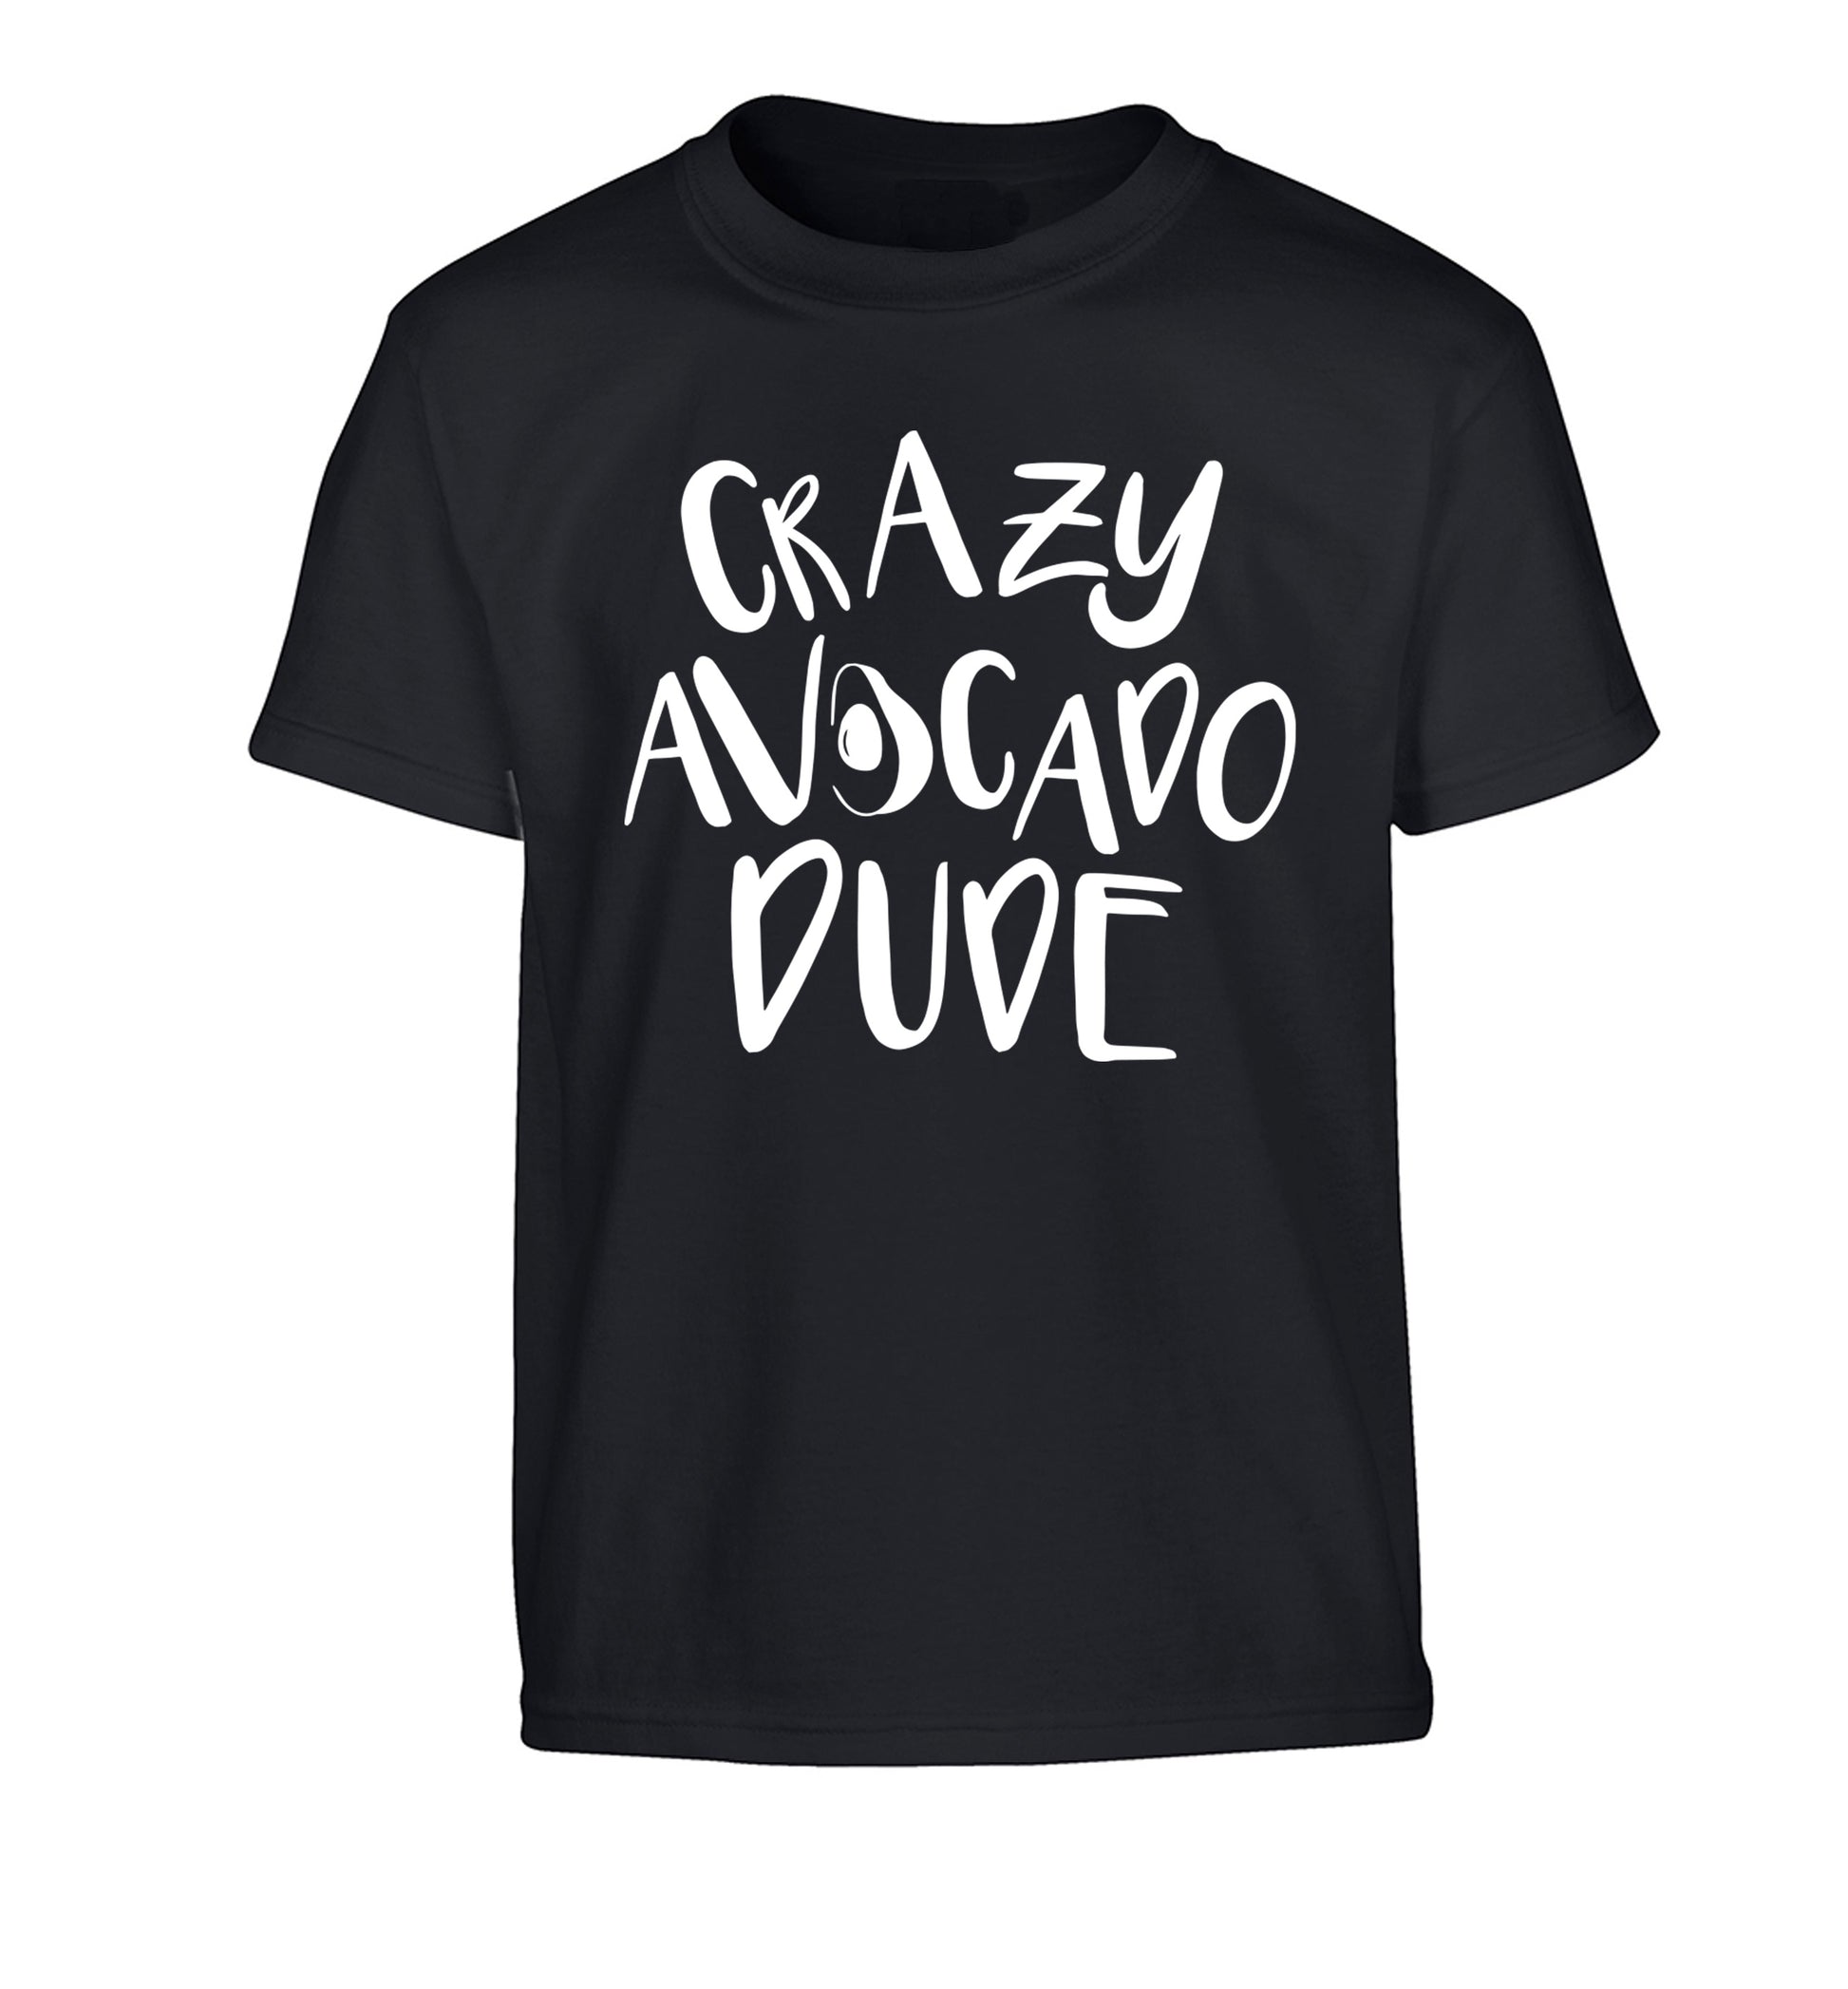 Crazy avocado dude Children's black Tshirt 12-14 Years